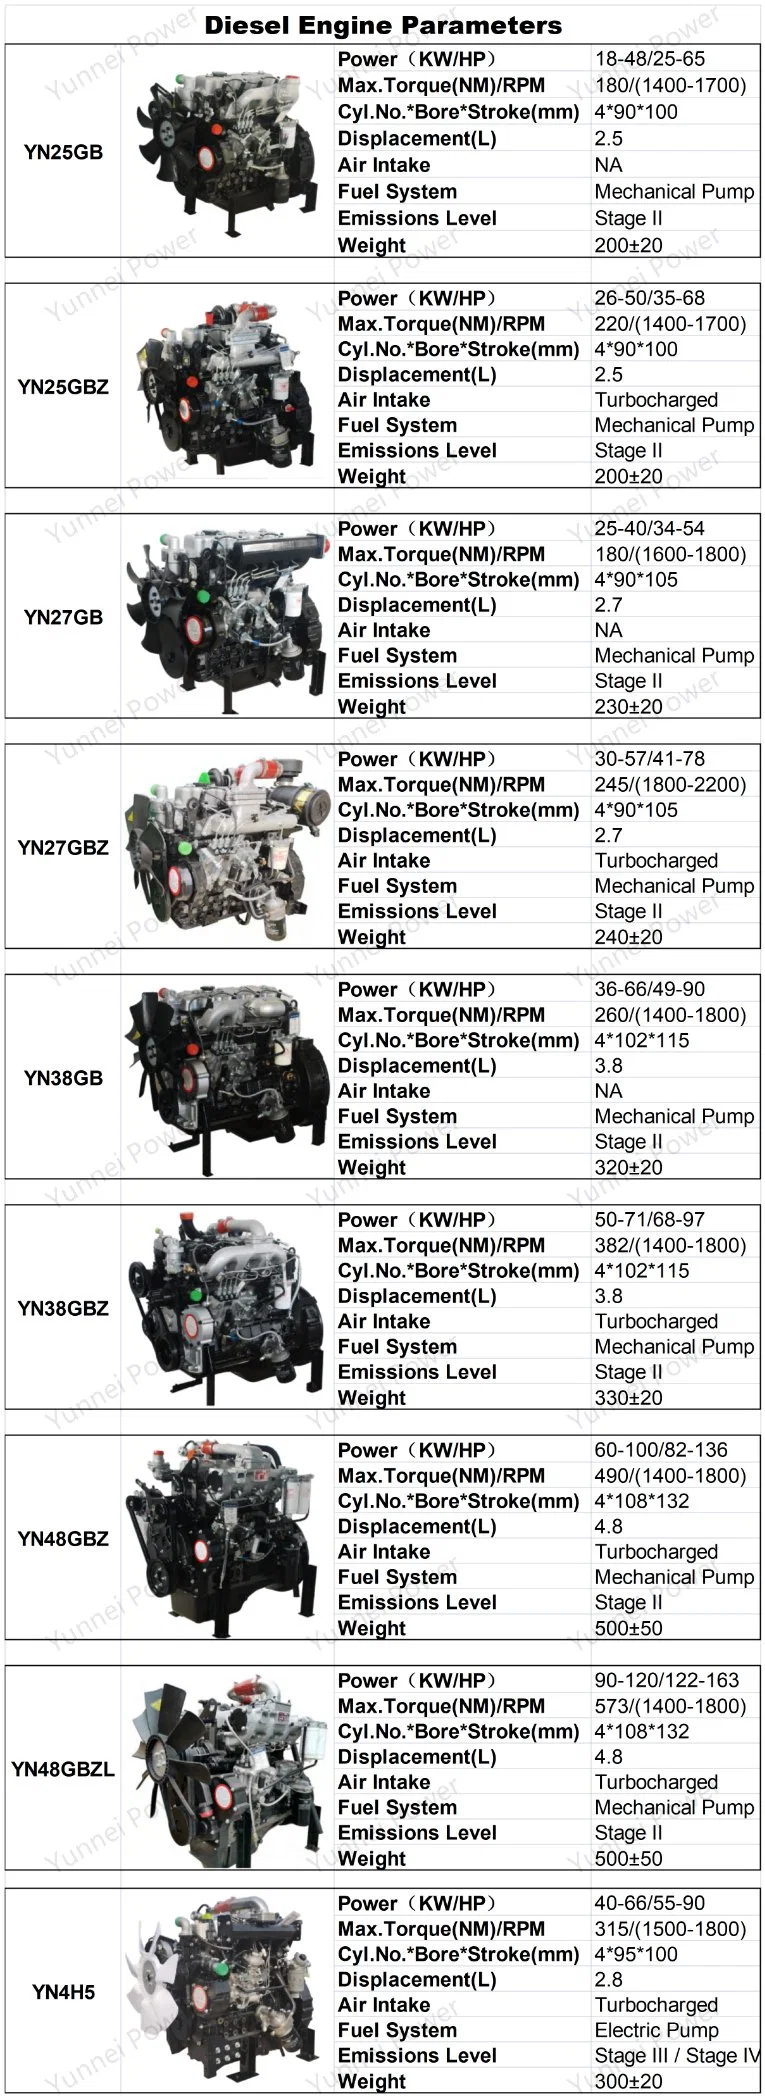 Yunnei Power Machinery Diesel Engine for Diesel Generator Set/Fire Fighting Pump/Water Pump/Forklift/Light Truck/Wheel Loader/Tractor